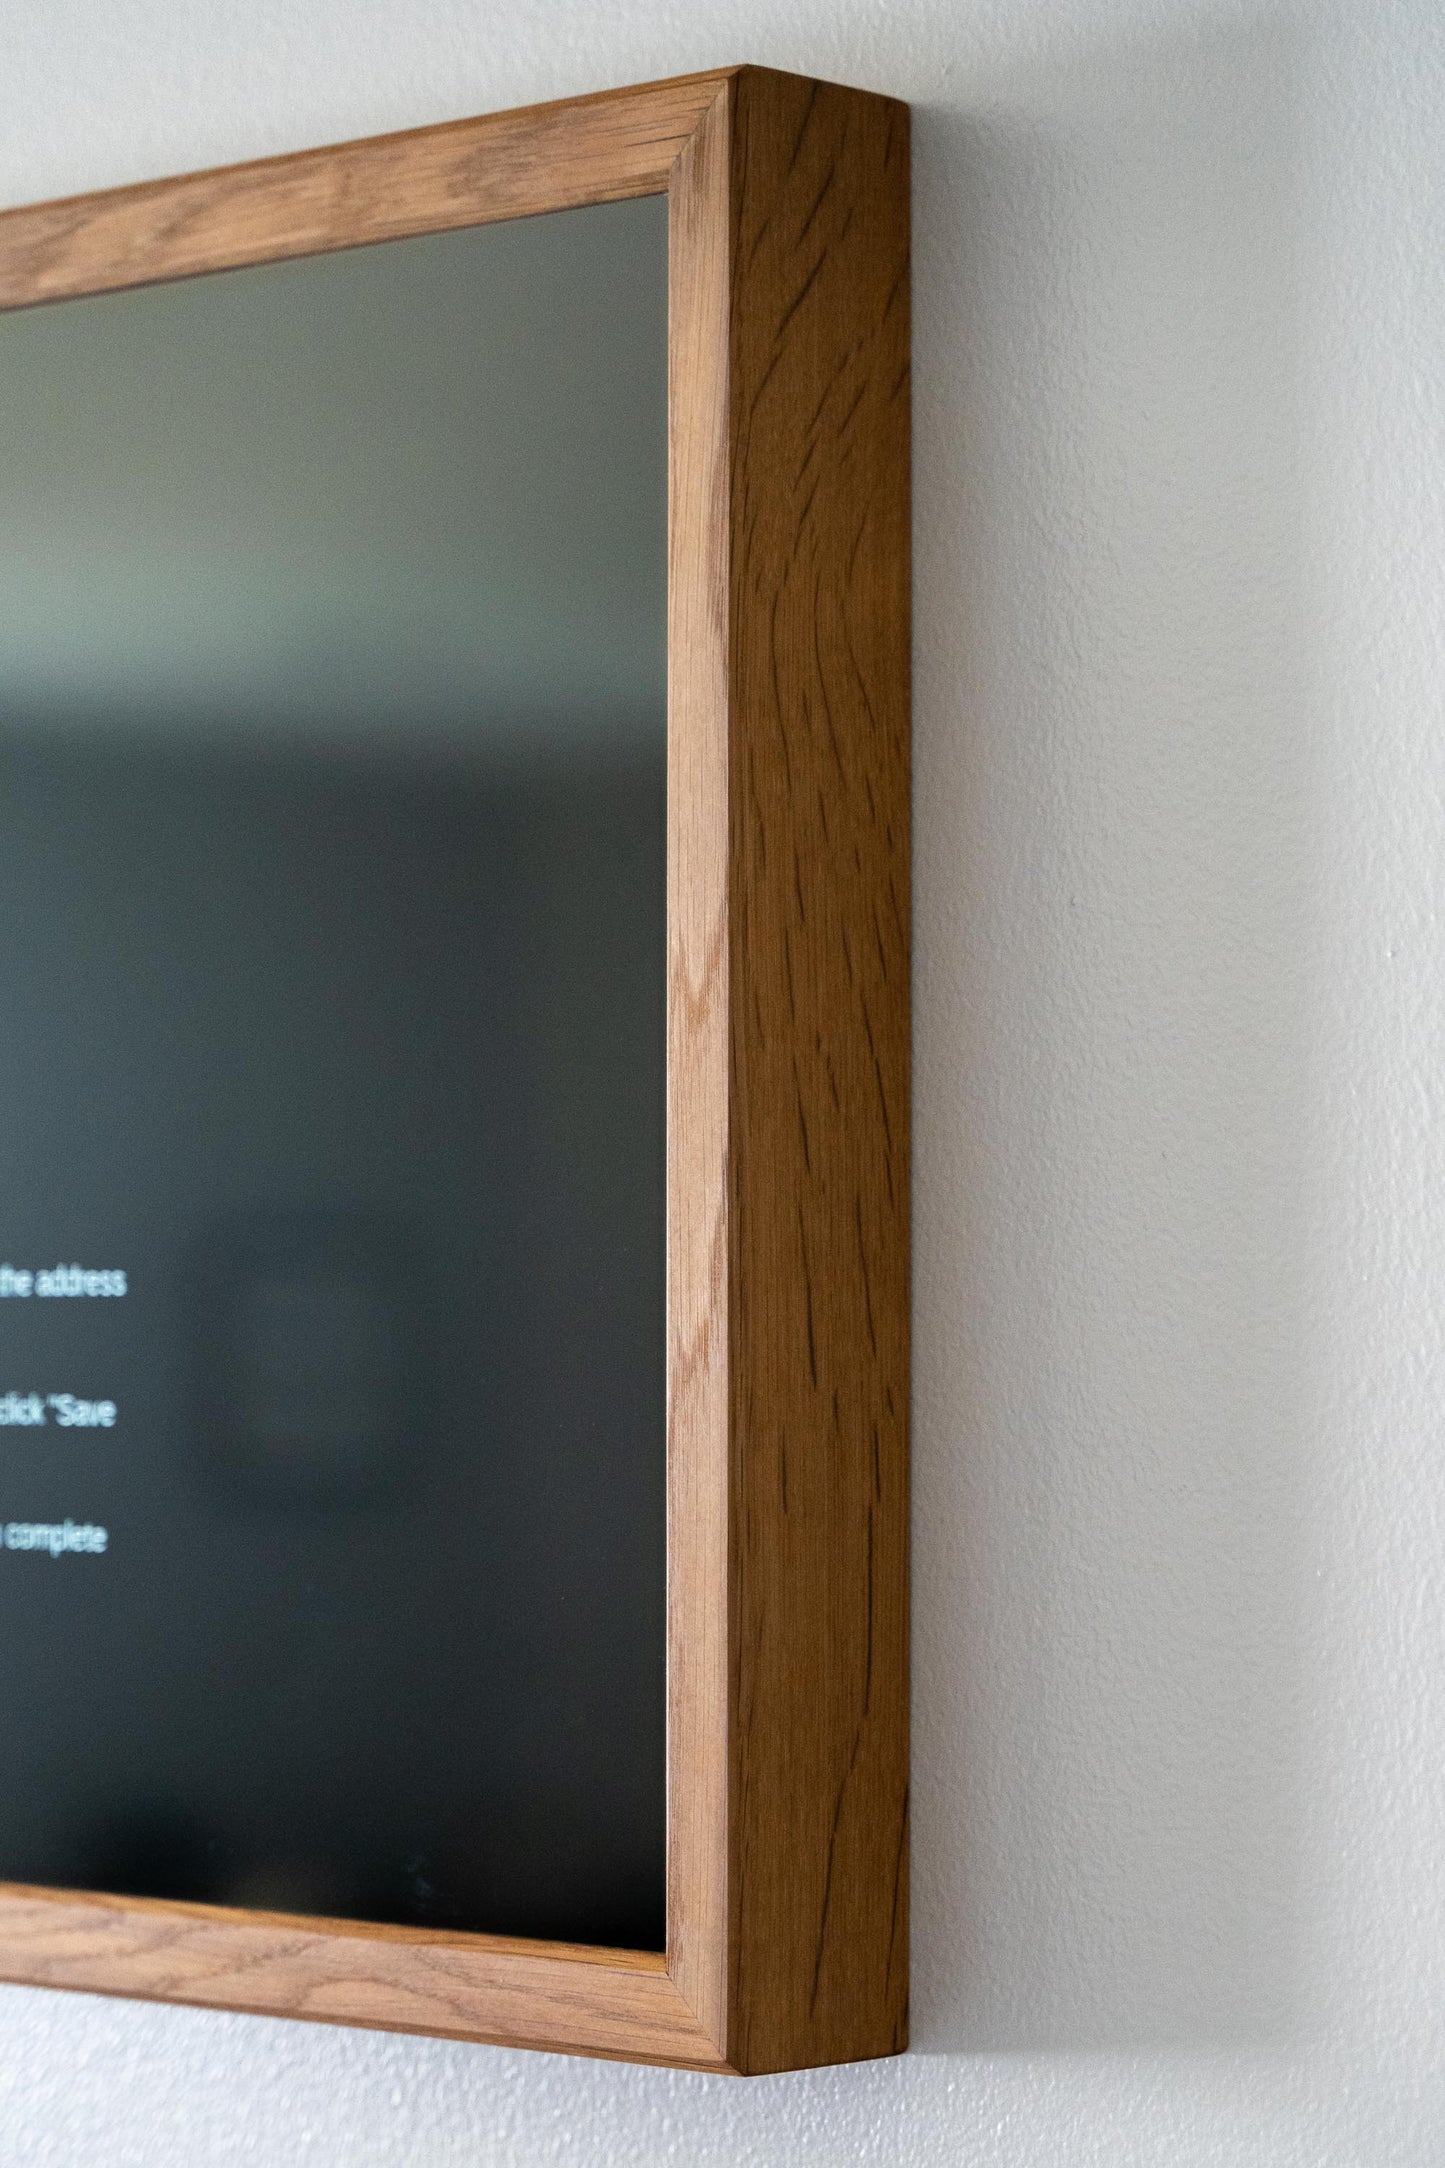 32" Digital Wall Display - Smart Screen - Wifi Calendar - Raspberry Pi - Smart Hub - Smart Home